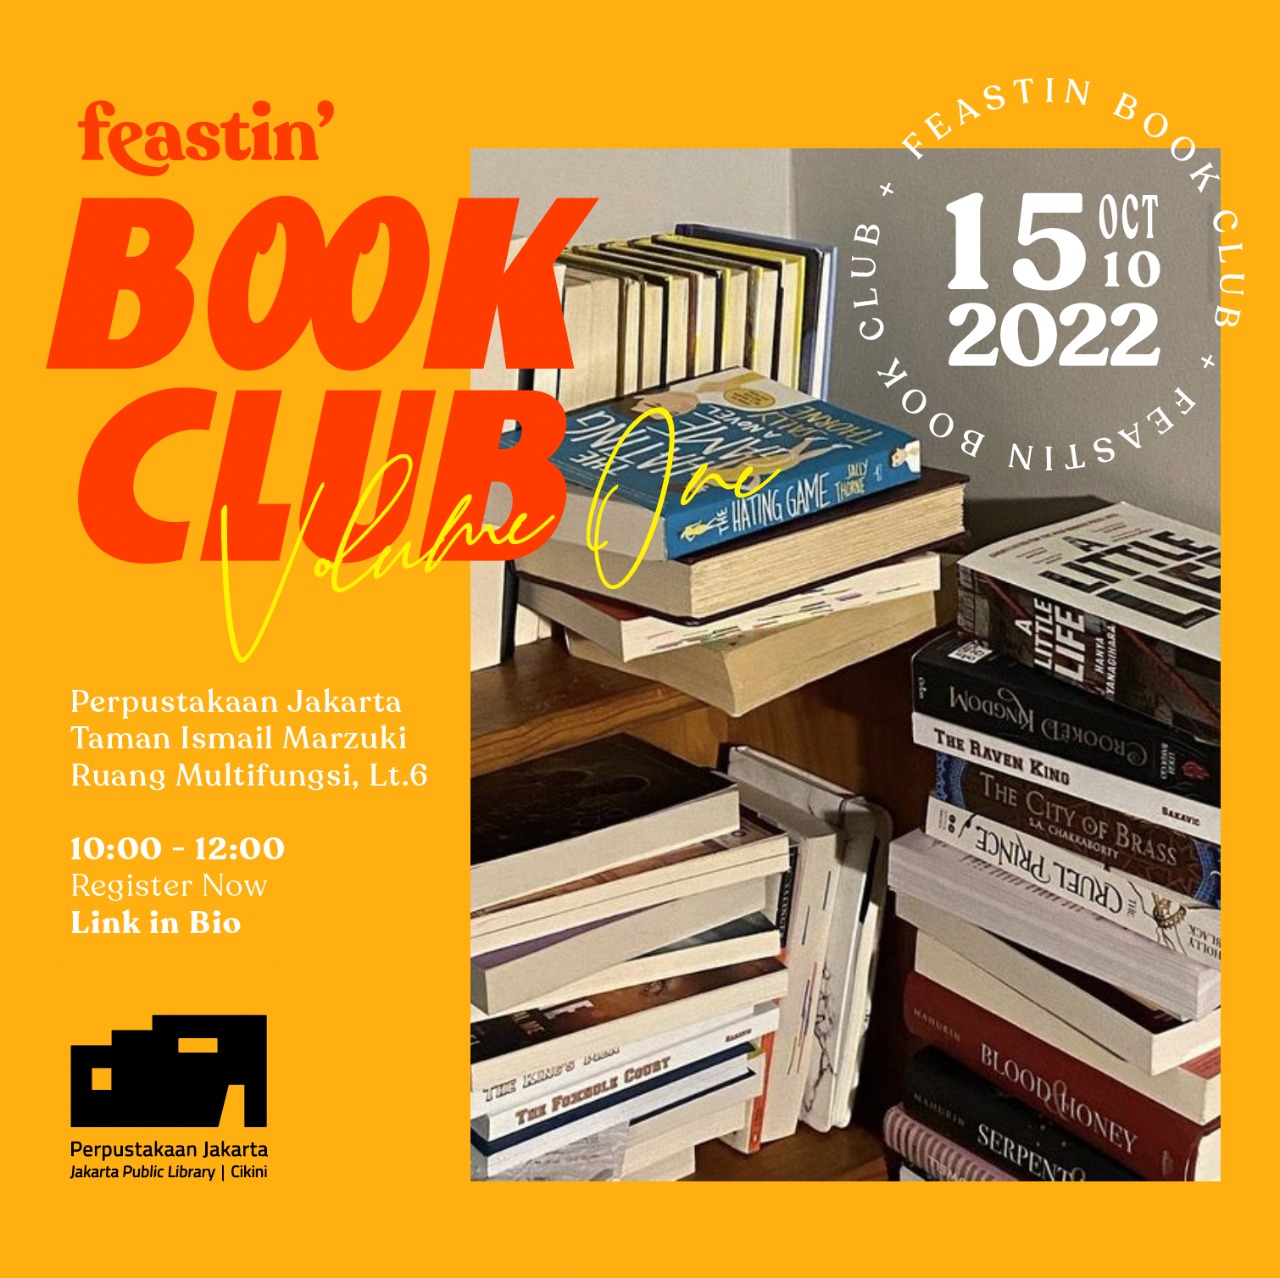 Feastin Book Club